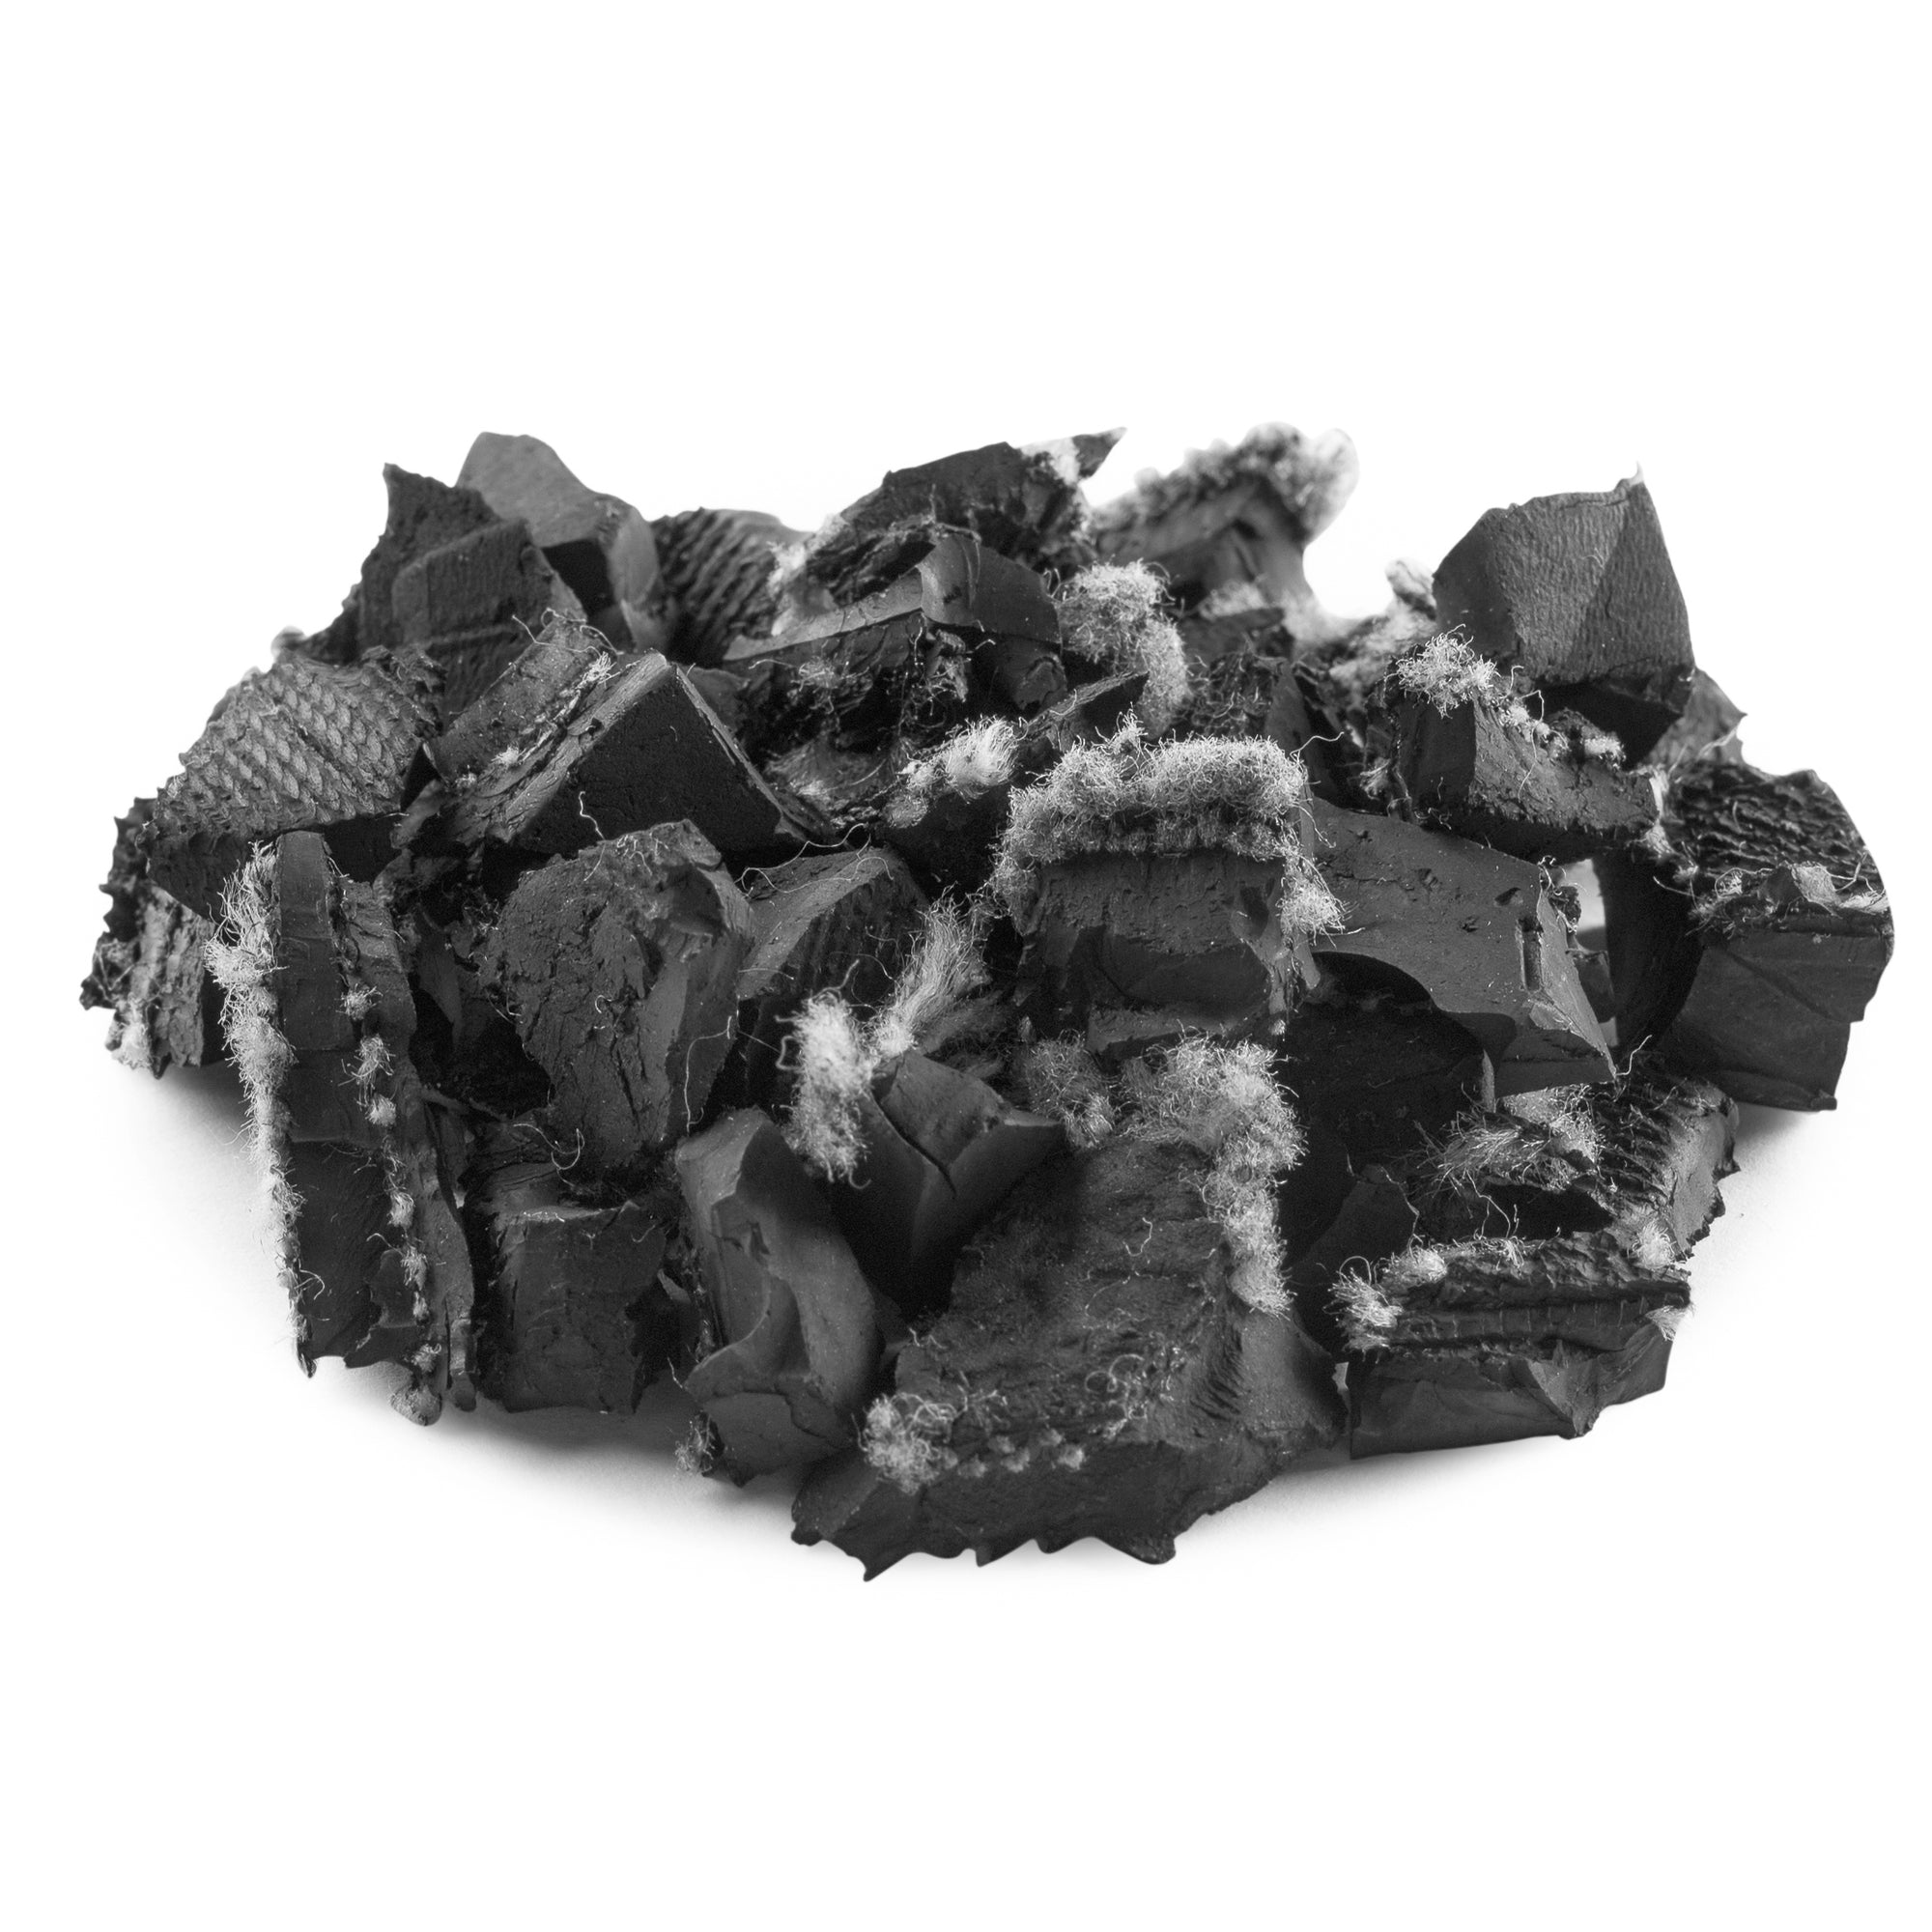 Playsafer Rubber Mulch | Unpainted Black